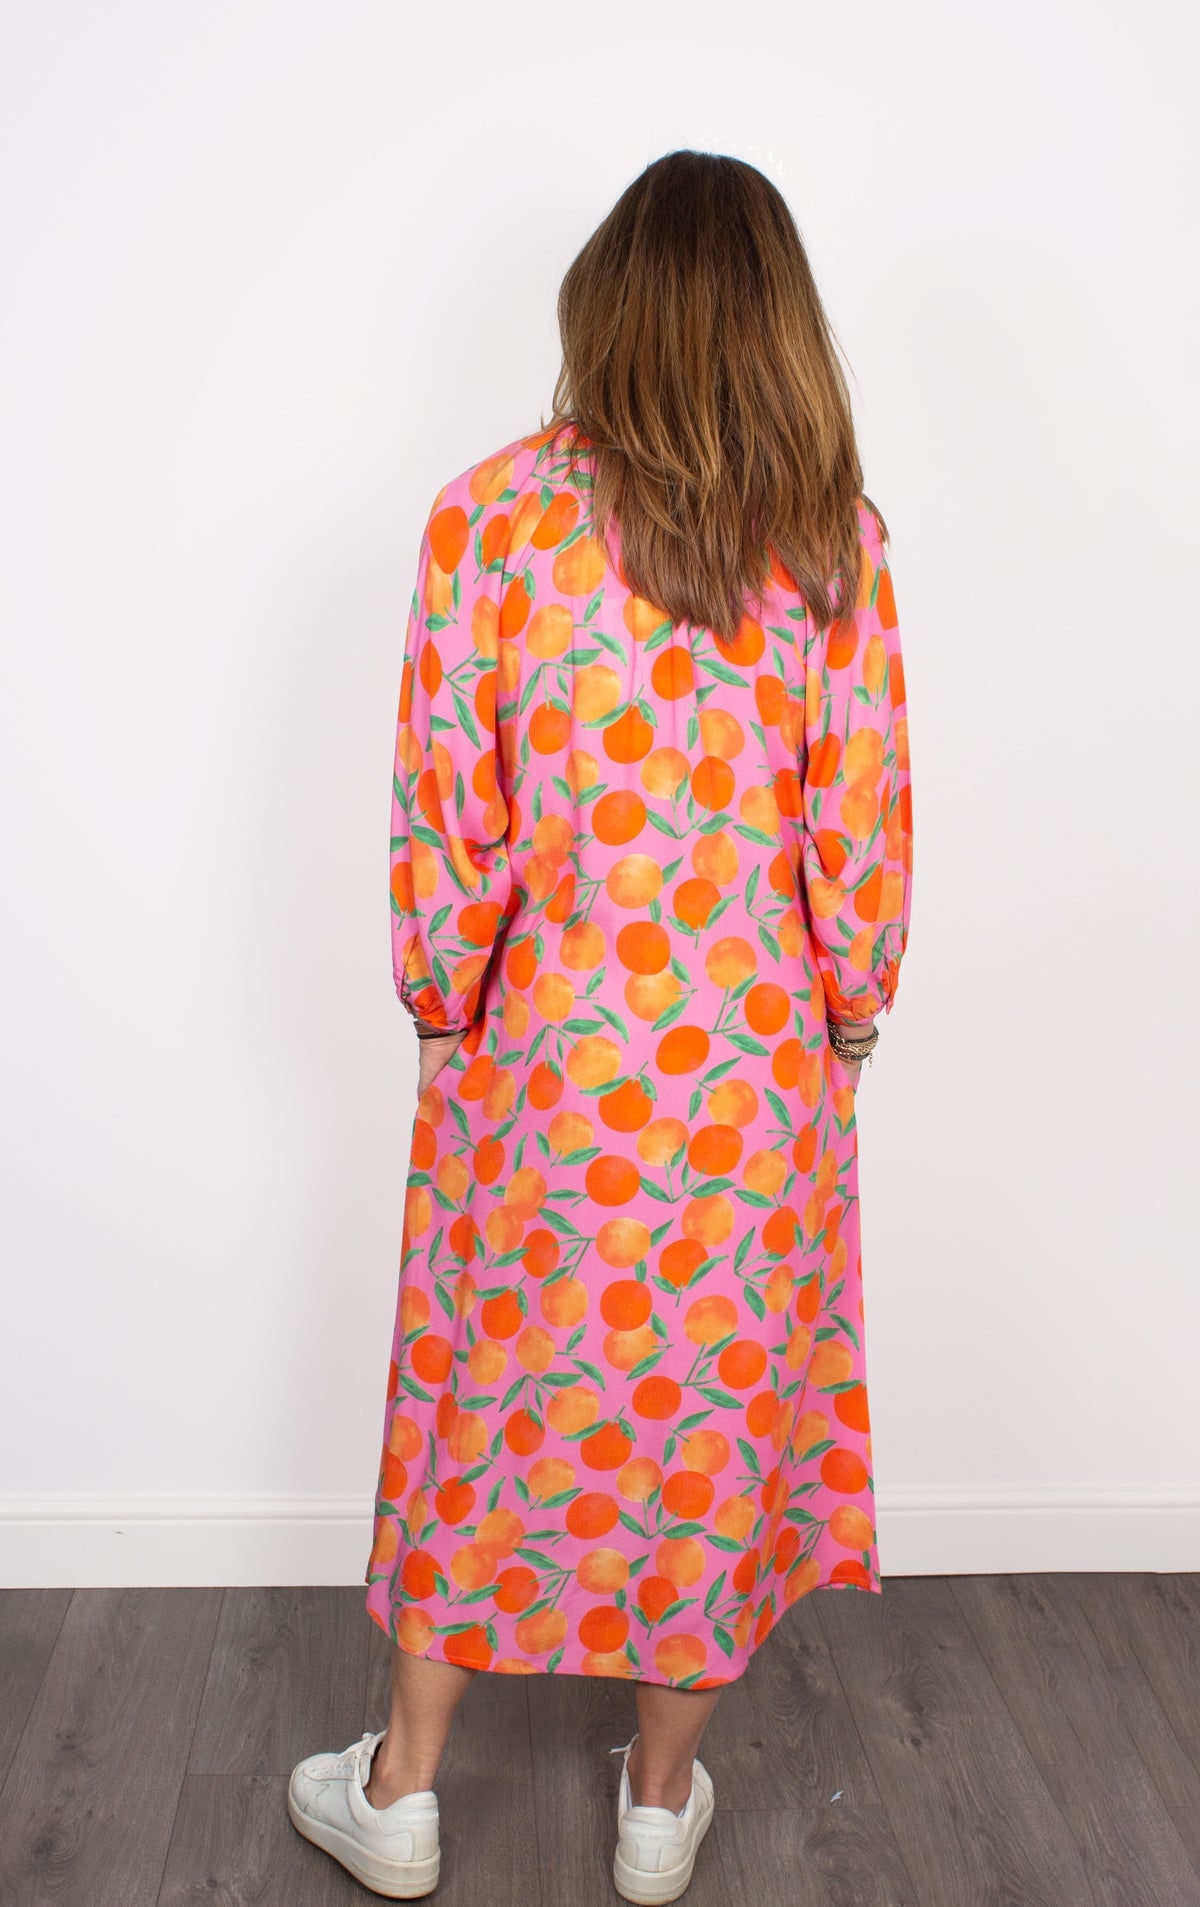 Primrose Park London Zion clementine-print dress